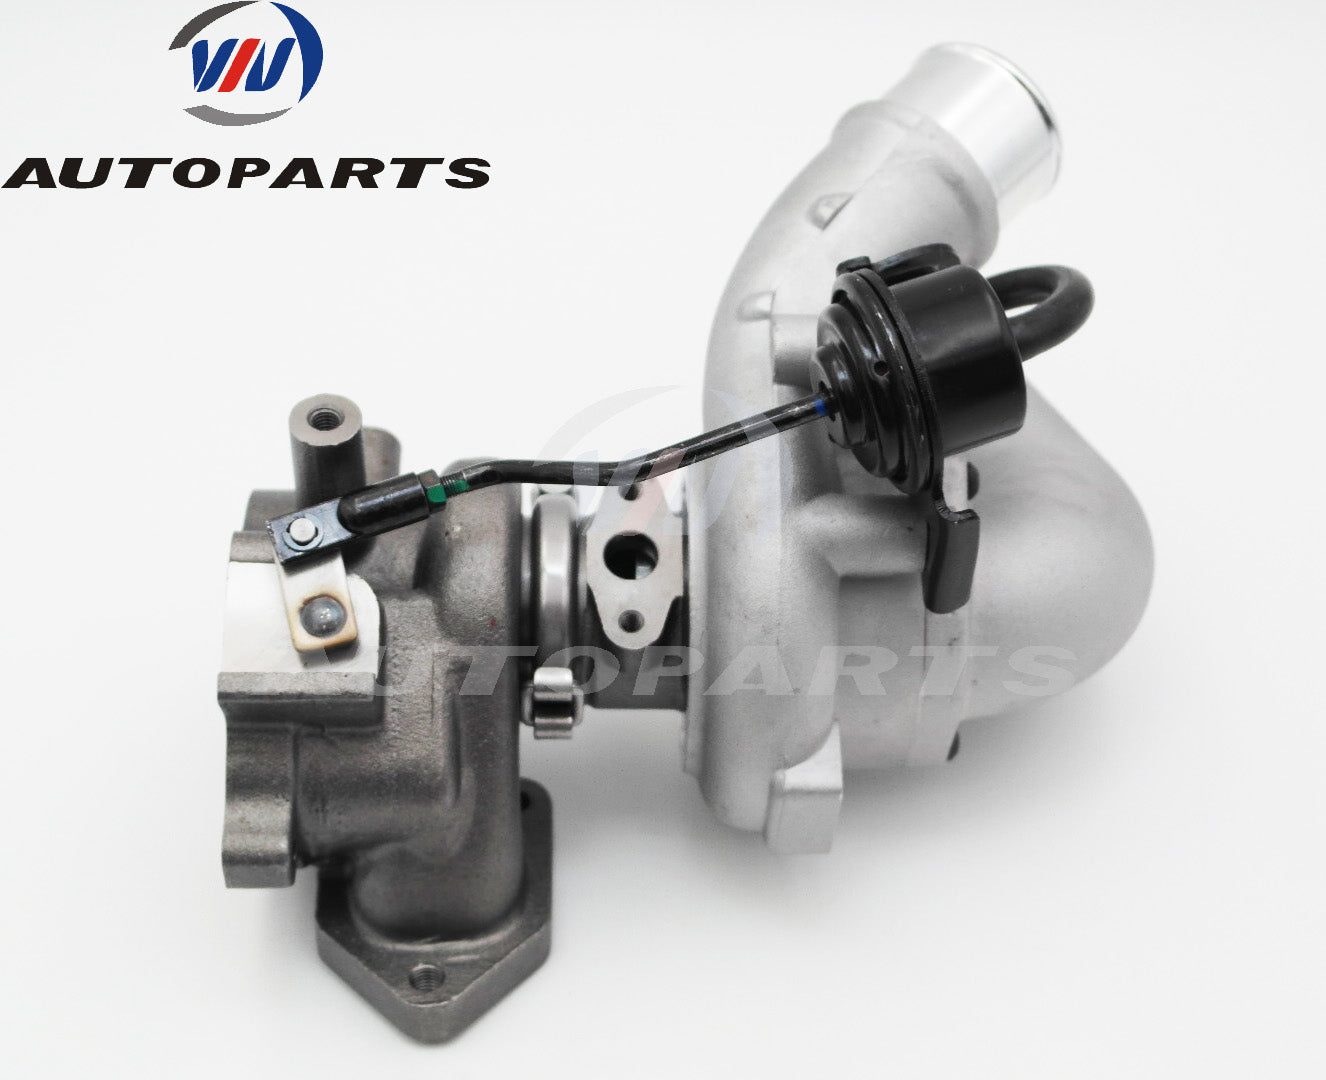 VIV AUTOPARTS Billet in Turbocharger 49590-45607 for Kia Bongo K2500 1.5L Diesel Engine